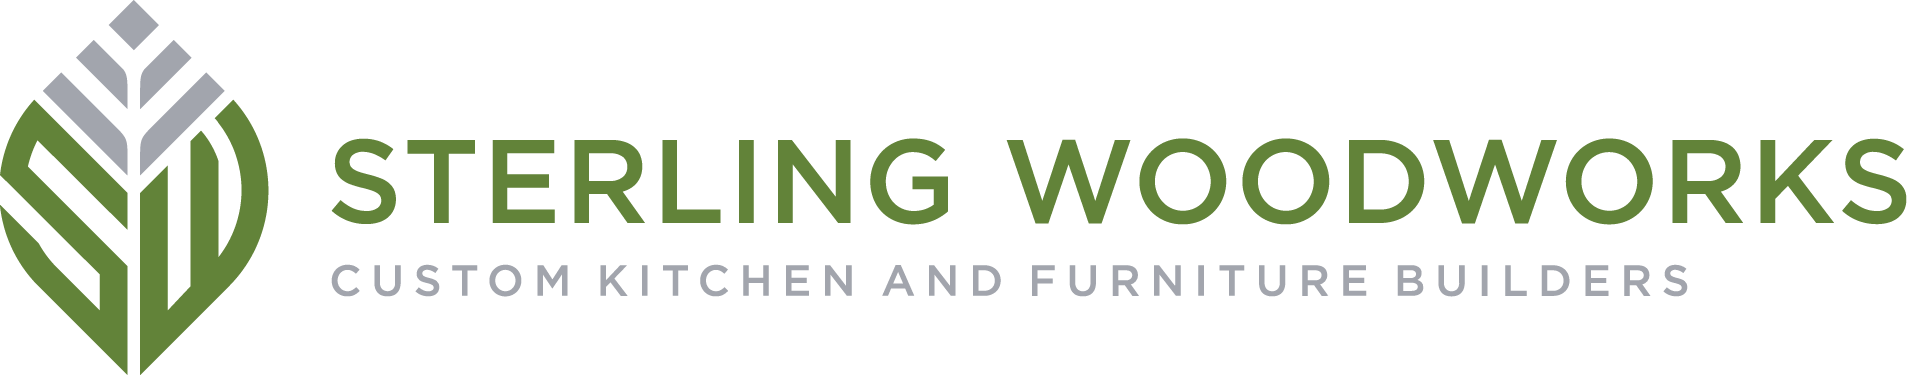 Sterling Woodworks Custom Kitchen and Furniture Builders Logo